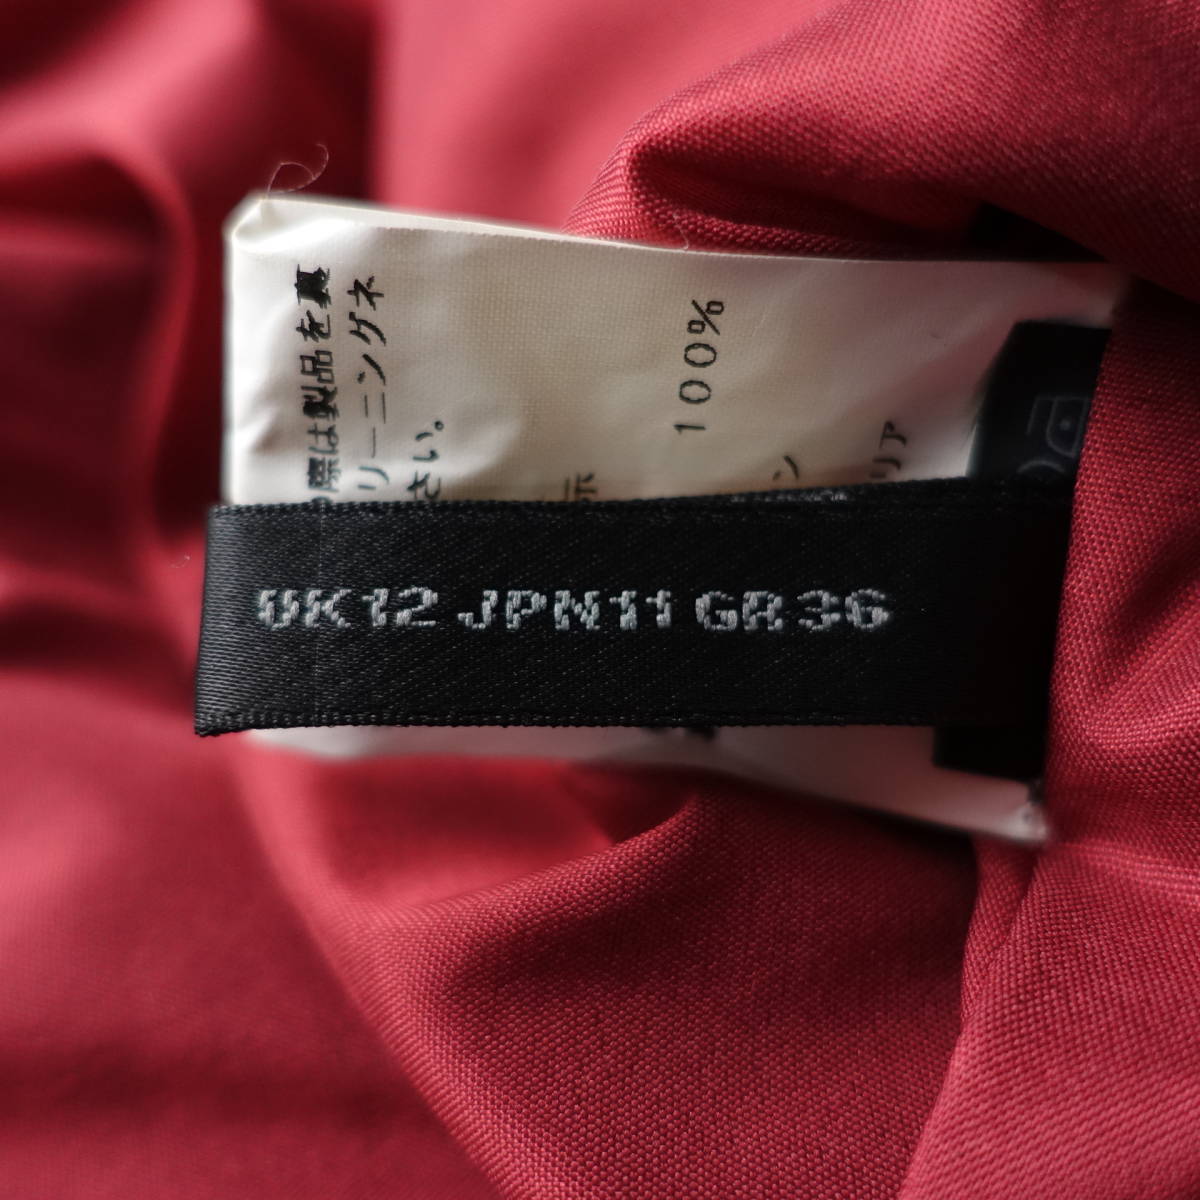 DONNAKARAN/ Donna Karan /JPN11/ Italy made / wool 100% jacket / red / red / lady's 